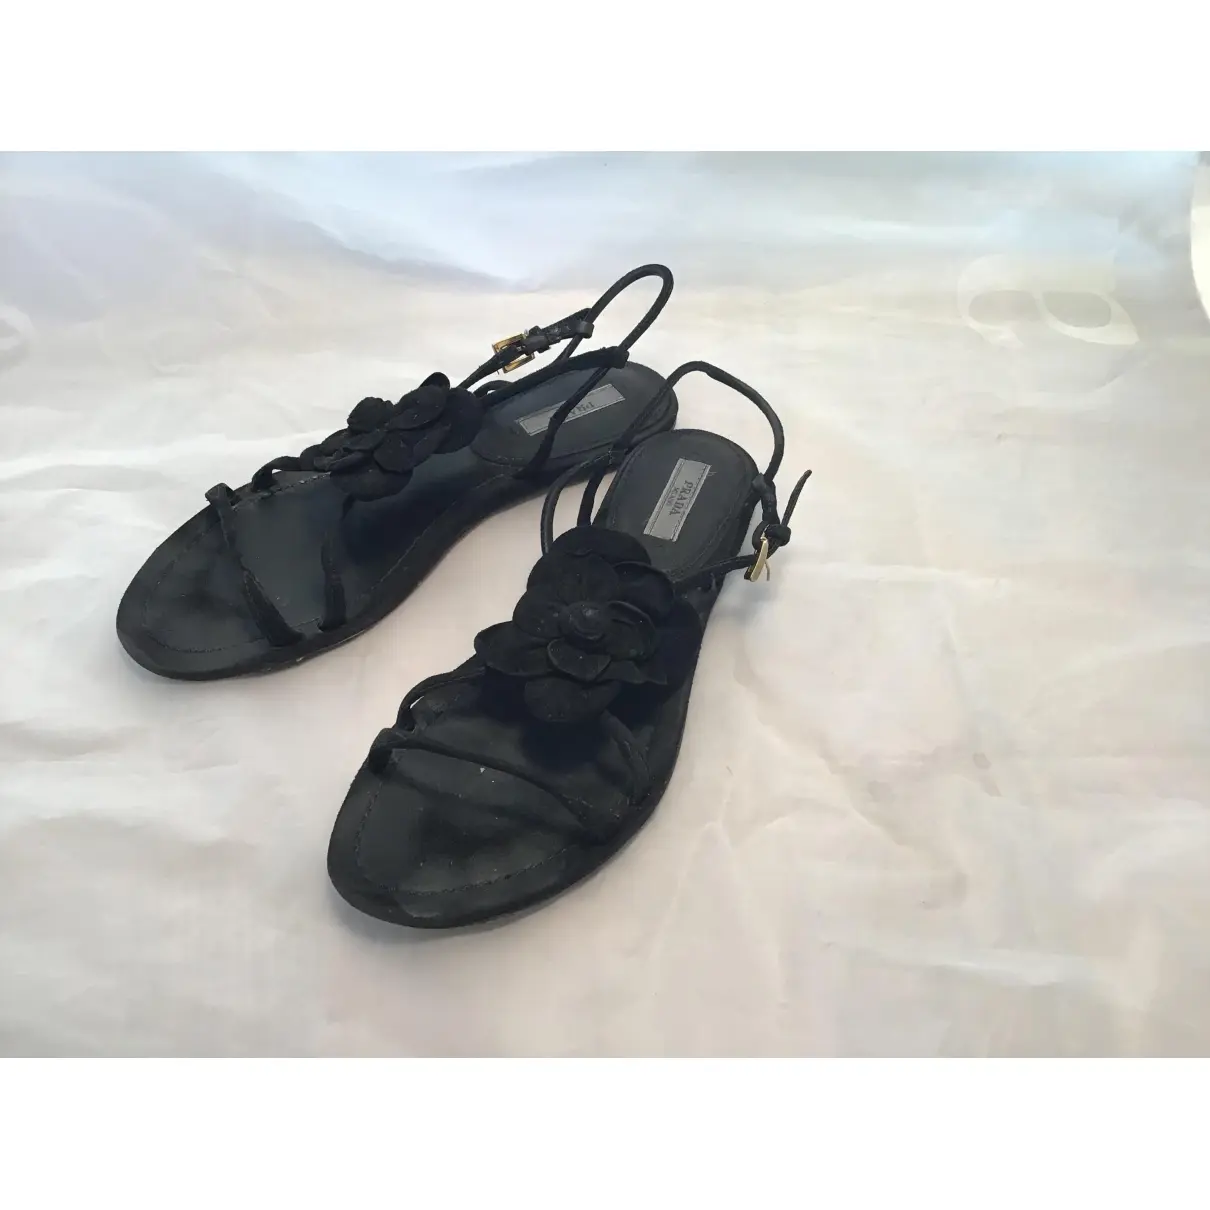 Buy Prada Sandal online